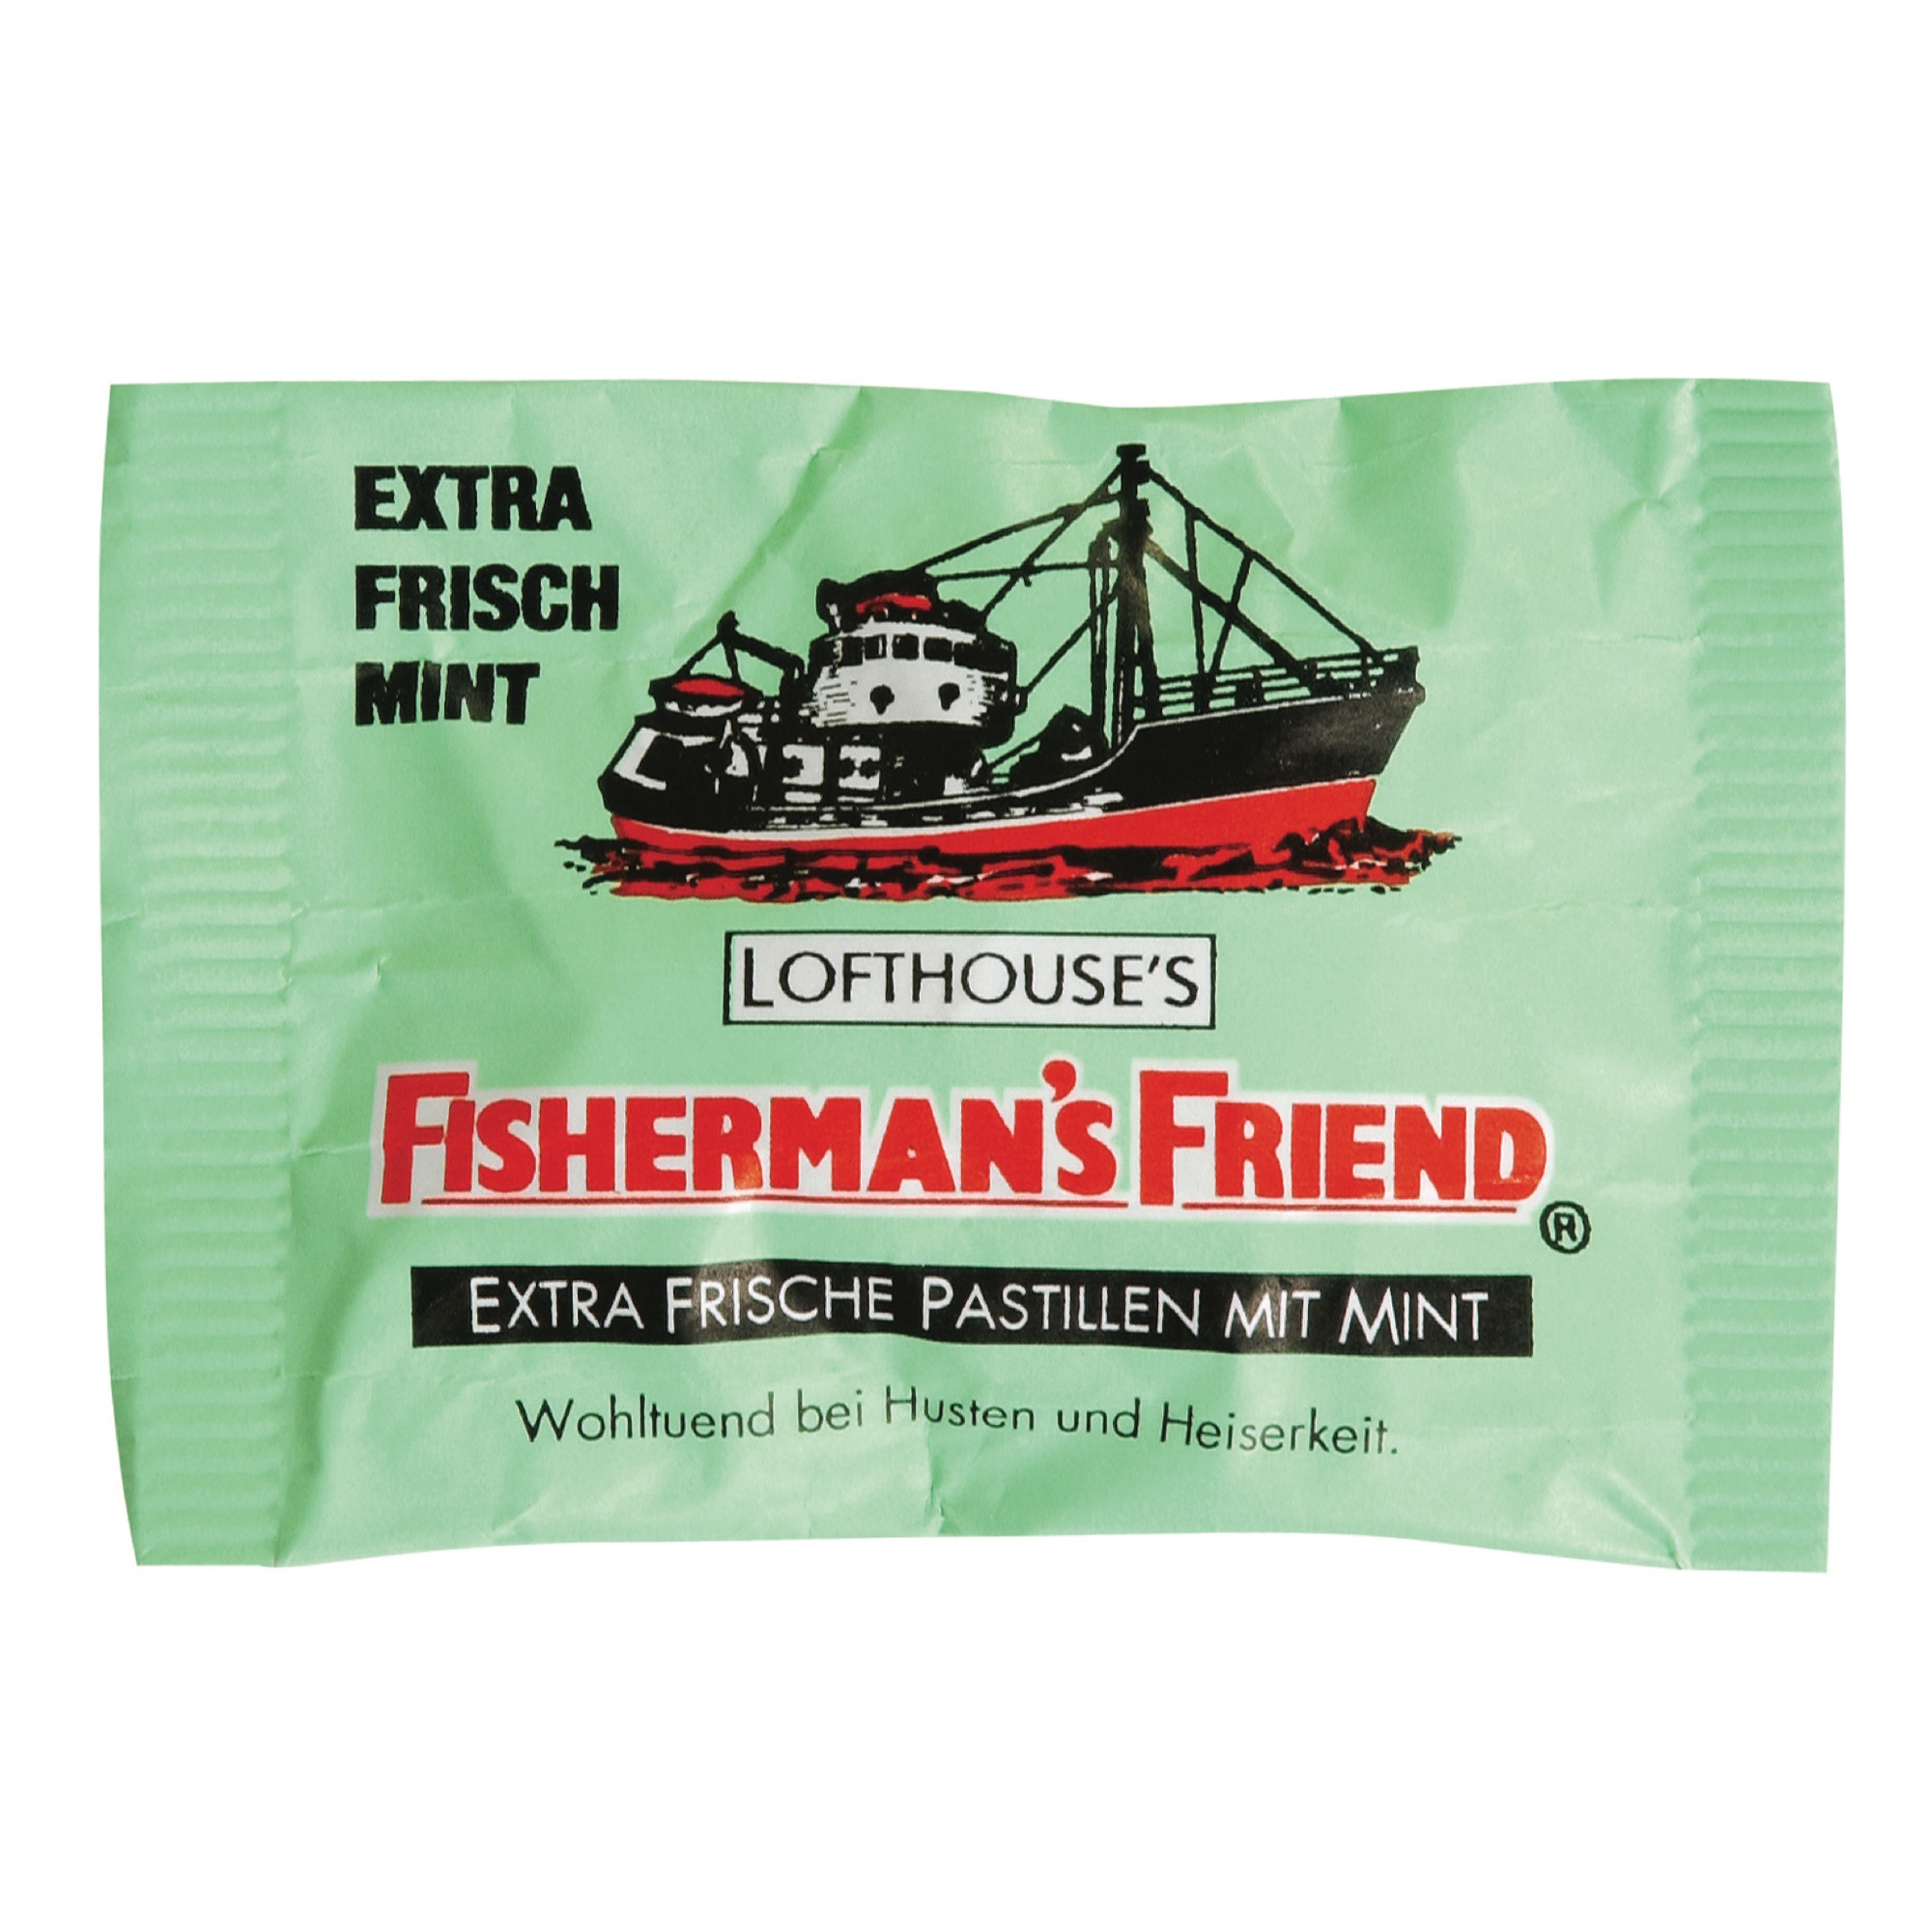 Fishermans Friend 25g, Mint